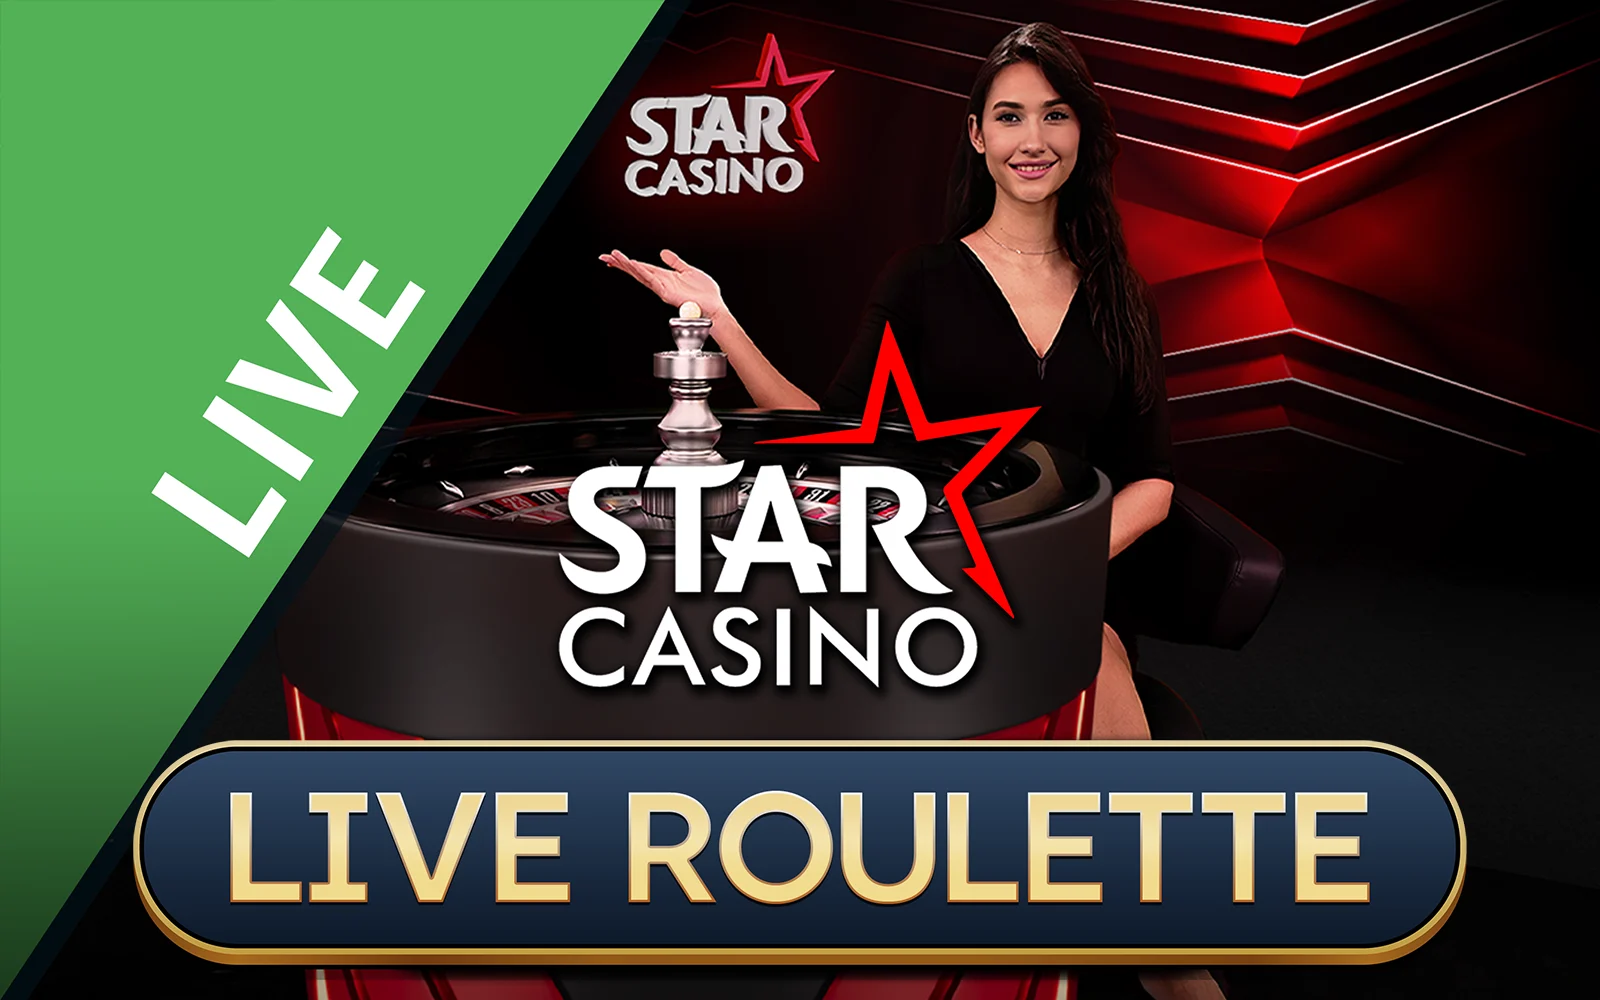 Juega a Starcasino Roulette en el casino en línea de Starcasino.be